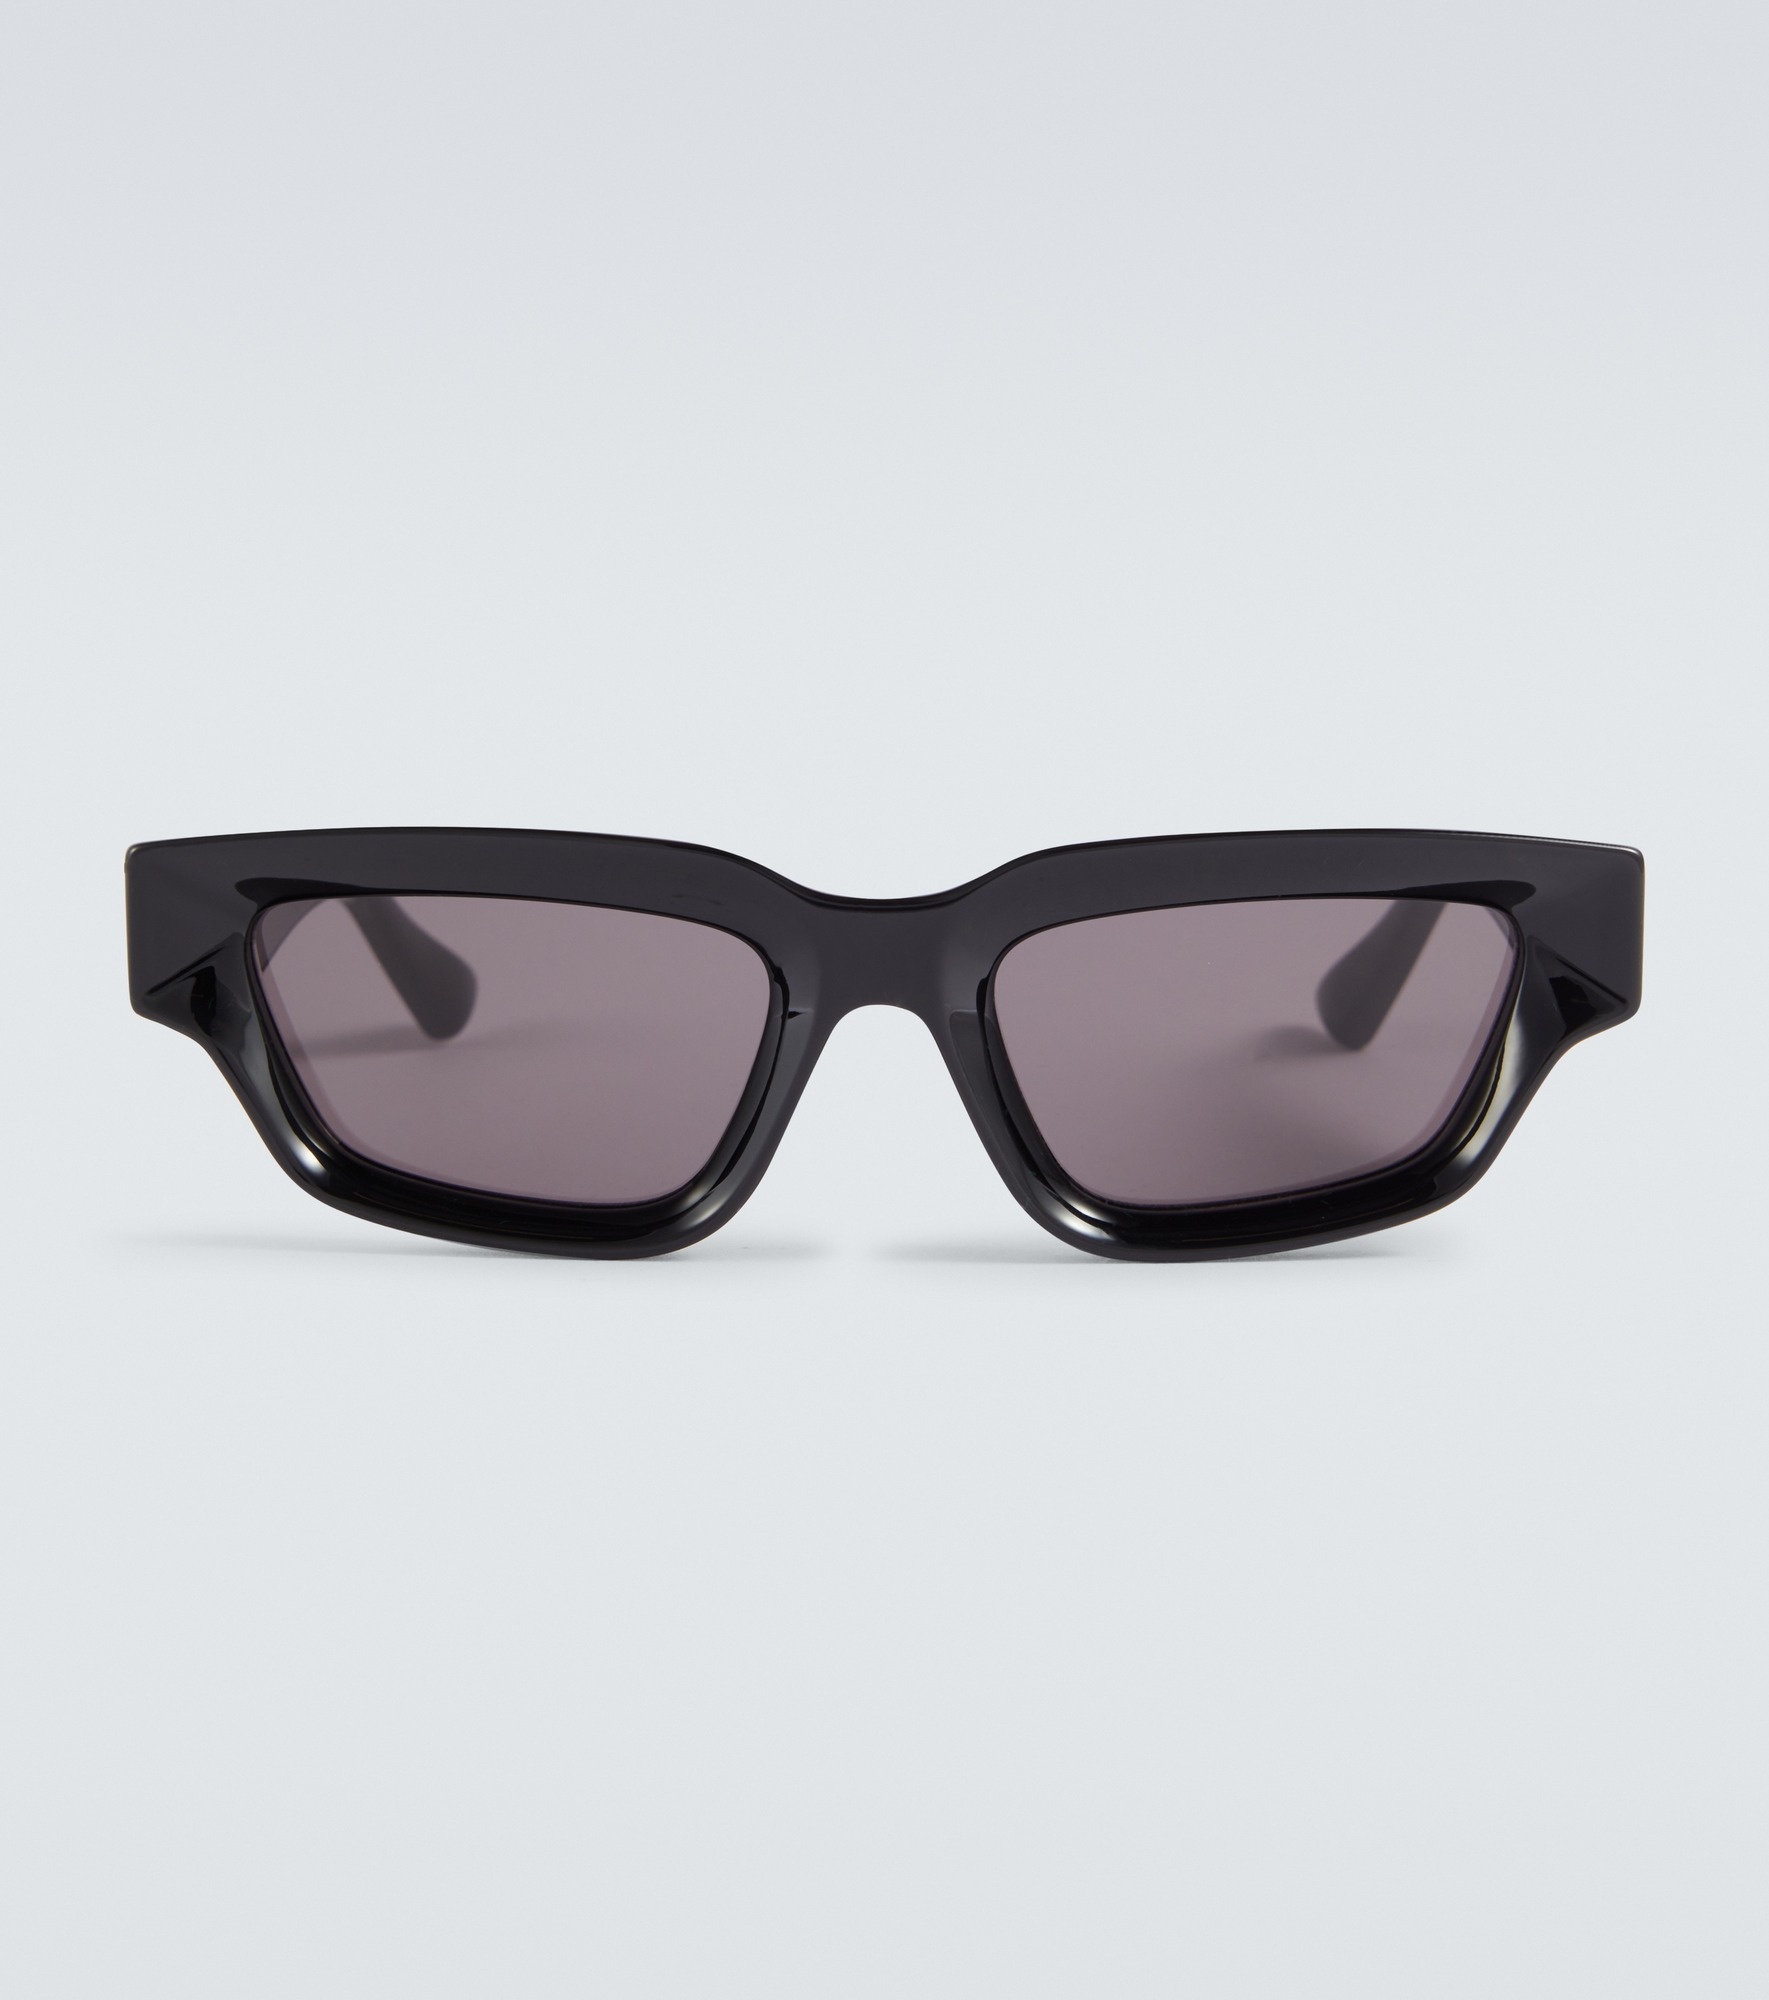 Sharp square sunglasses - 1